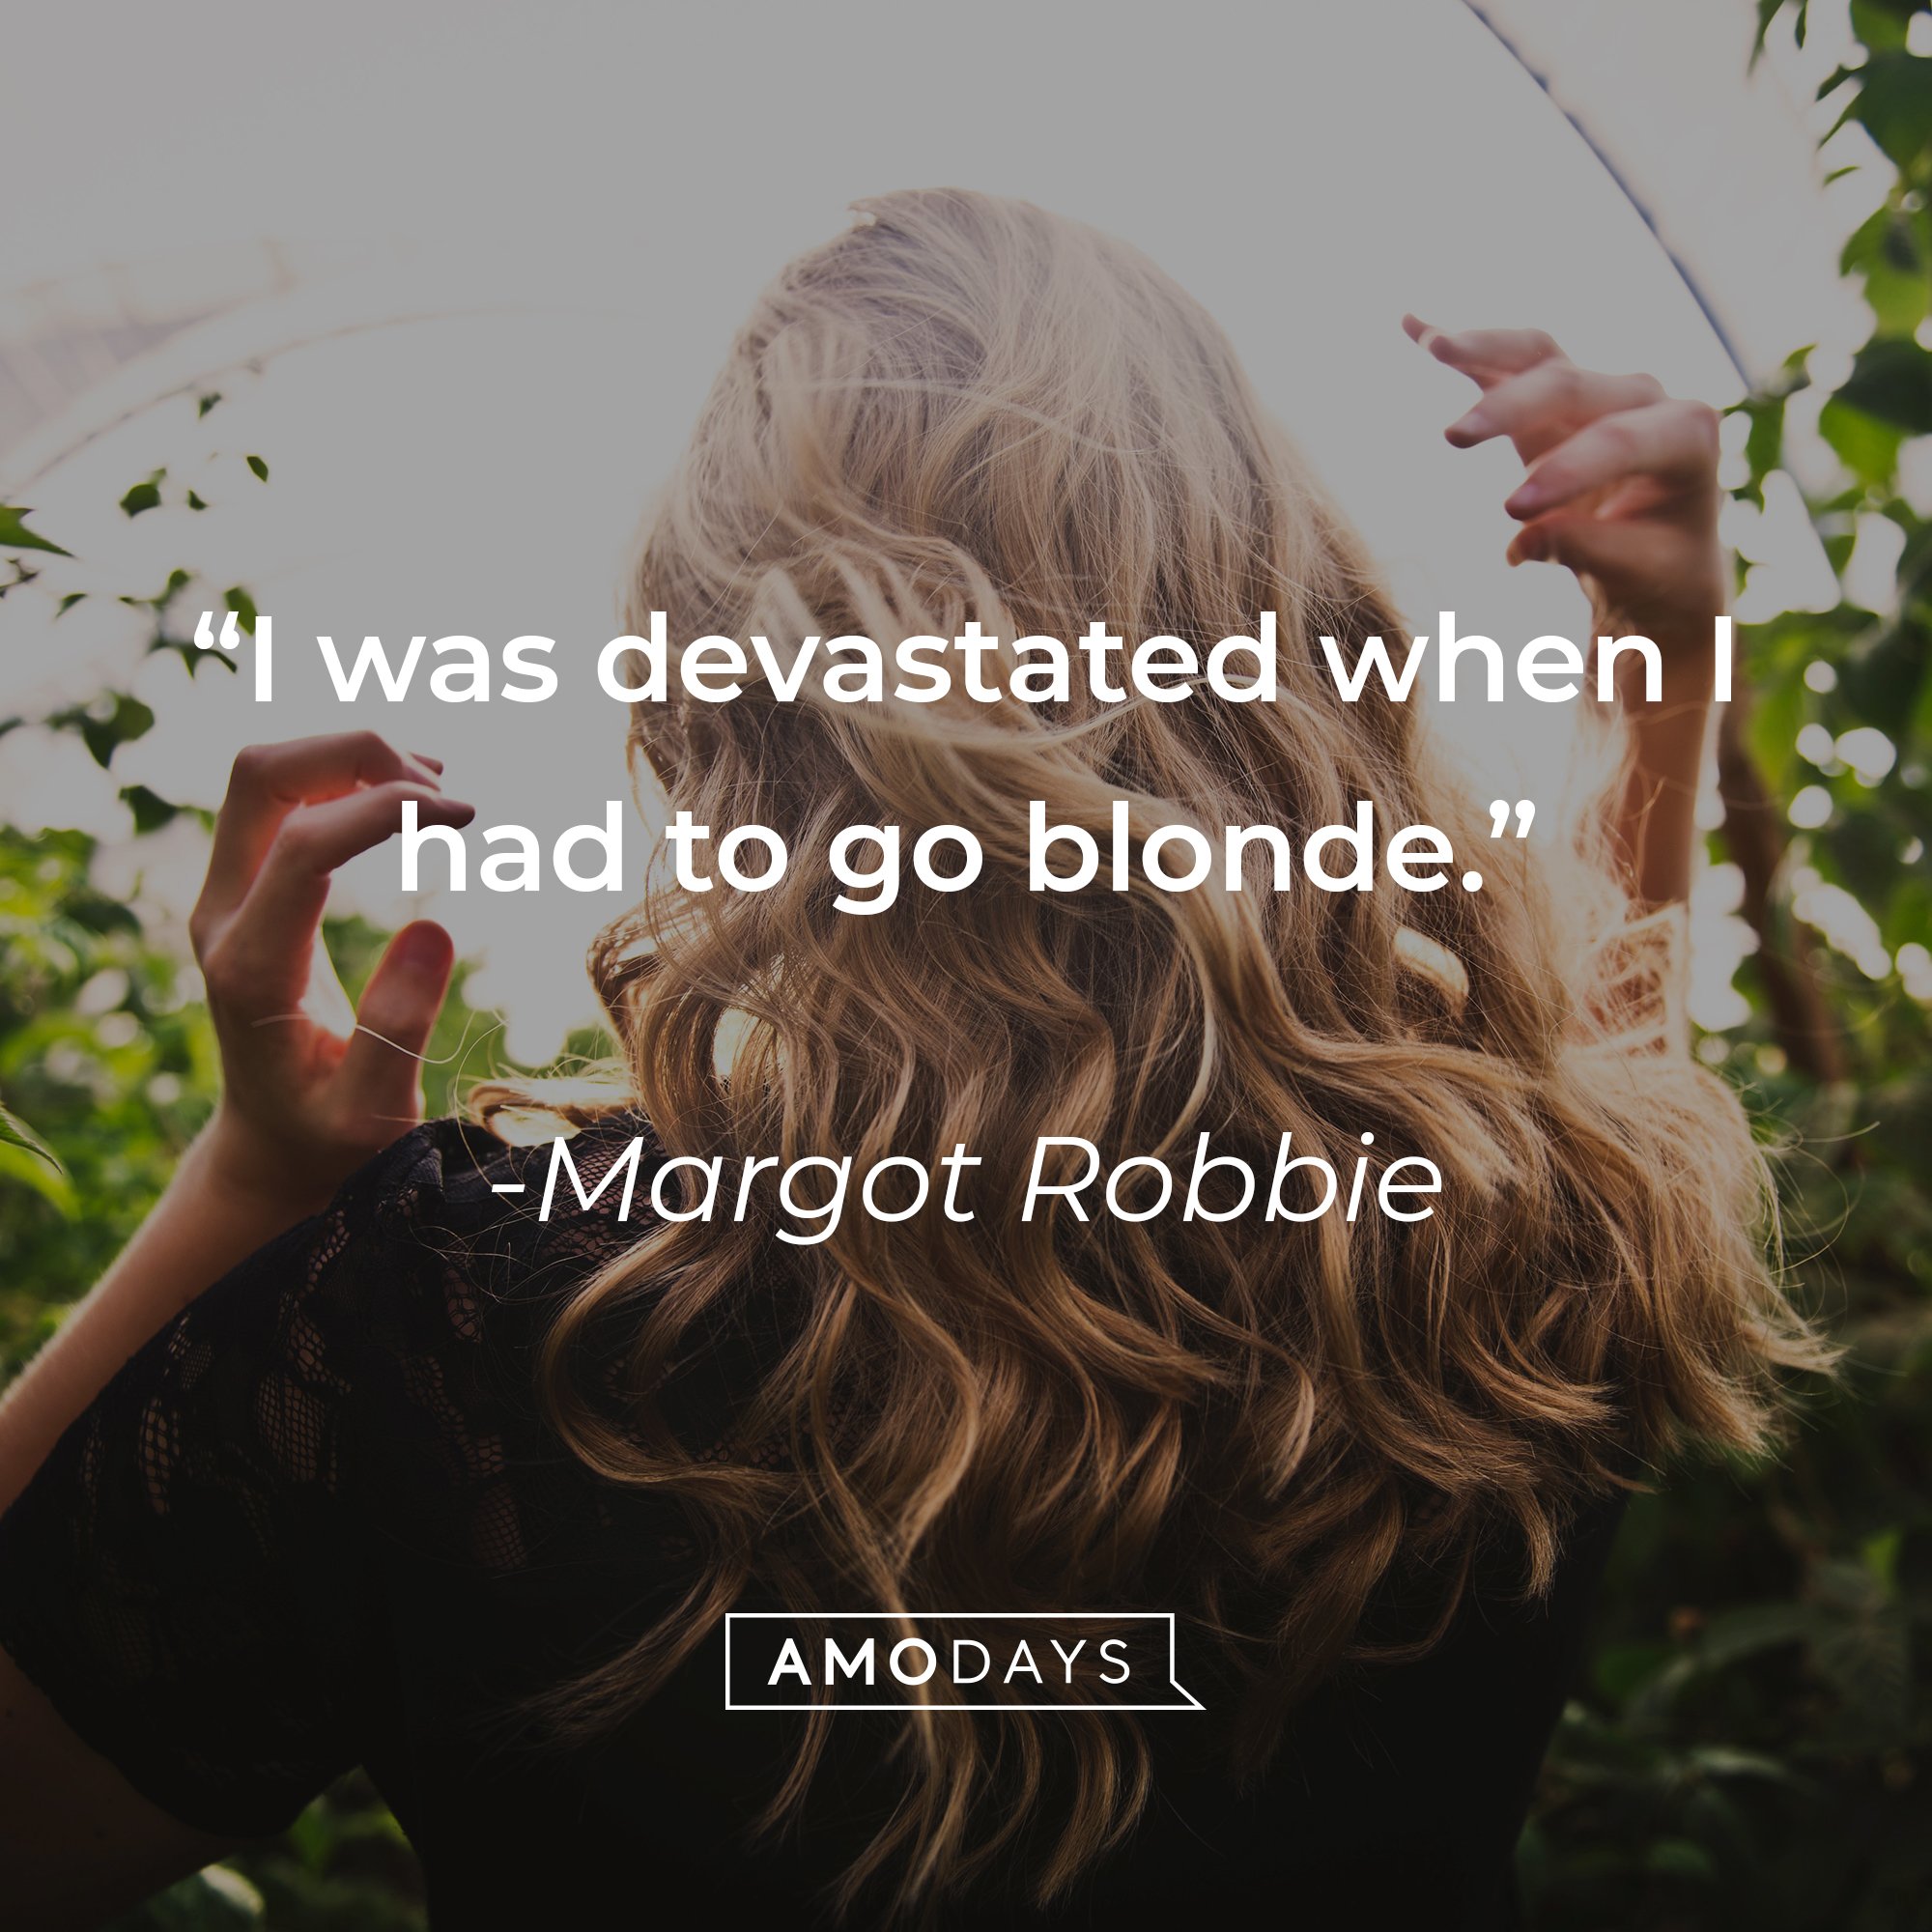 Margot Robbie’s quote: "I was devastated when I had to go blonde." | Image: AmoDays